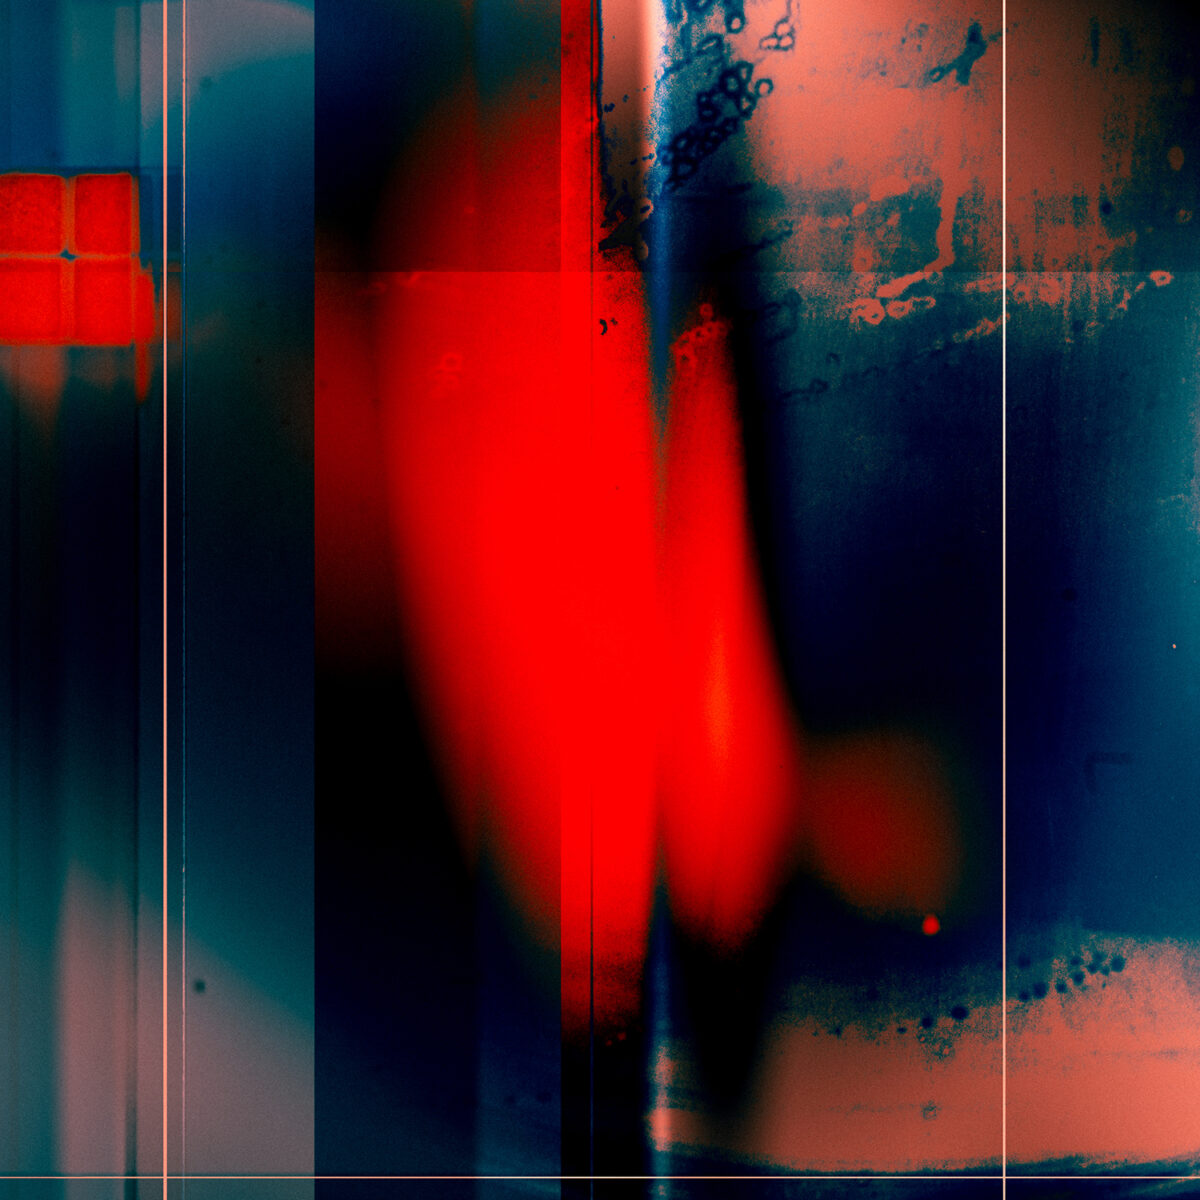 Joris Graaf, Red Skeleton, Digitally processed photograph, 2020